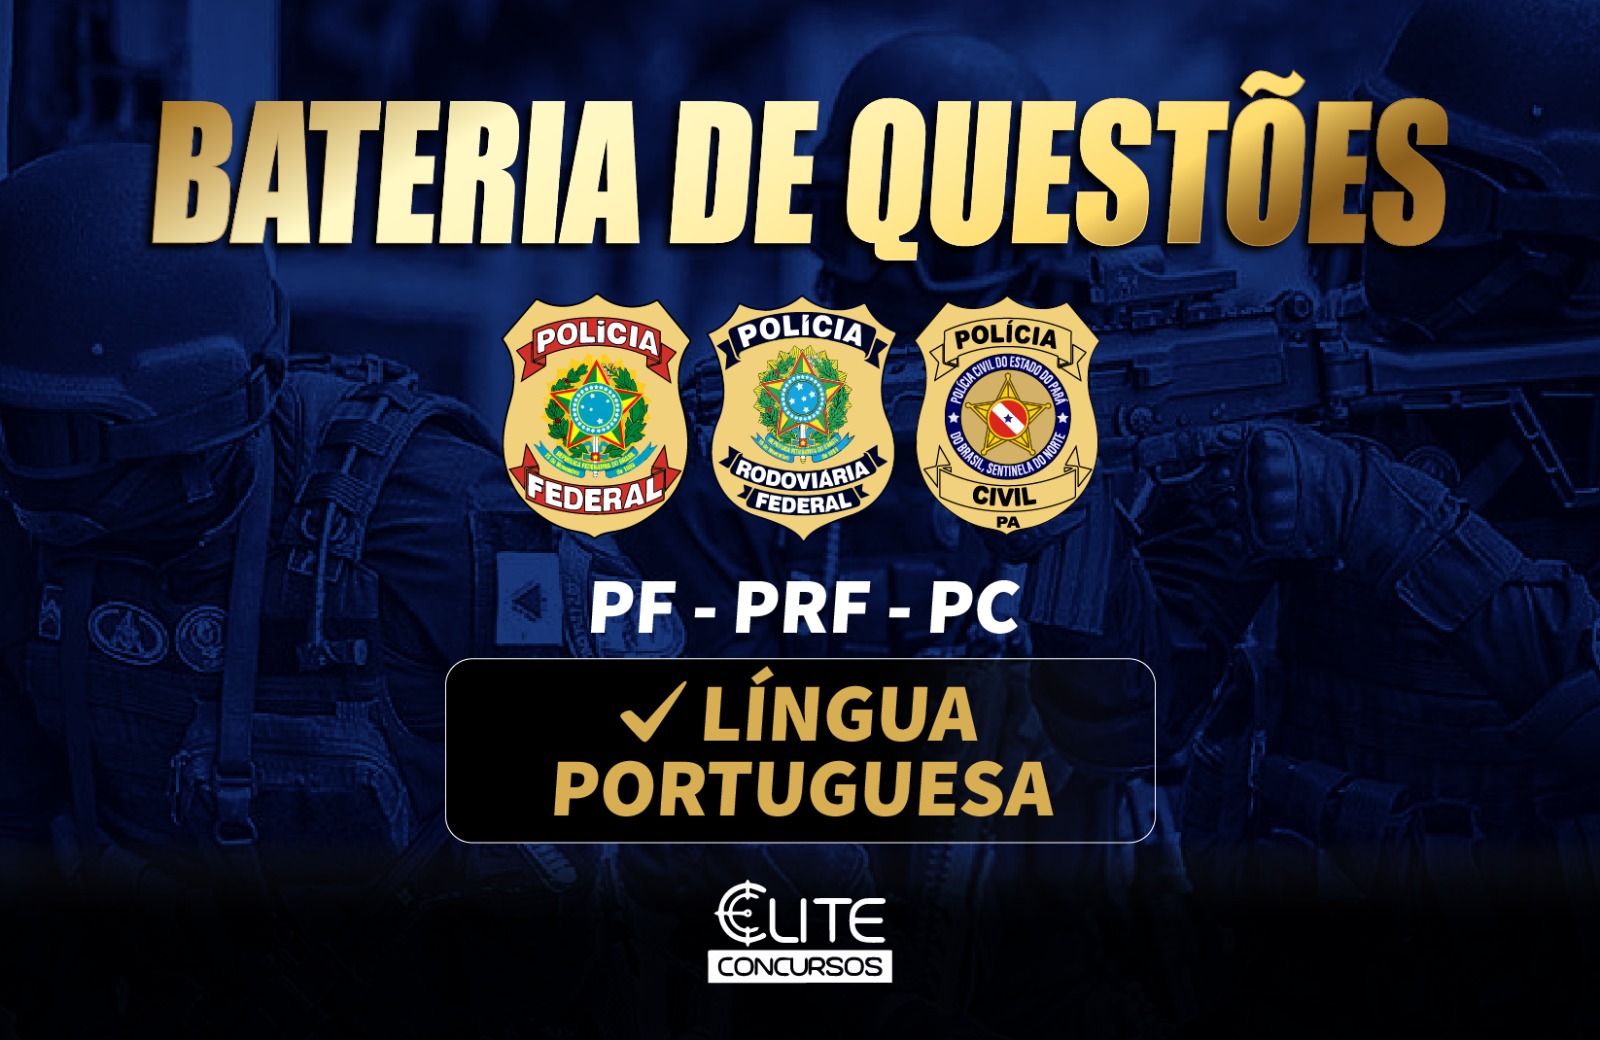 BATERIA DE QUESTES PC-PF-PRF - PORTUGUS - 27/04